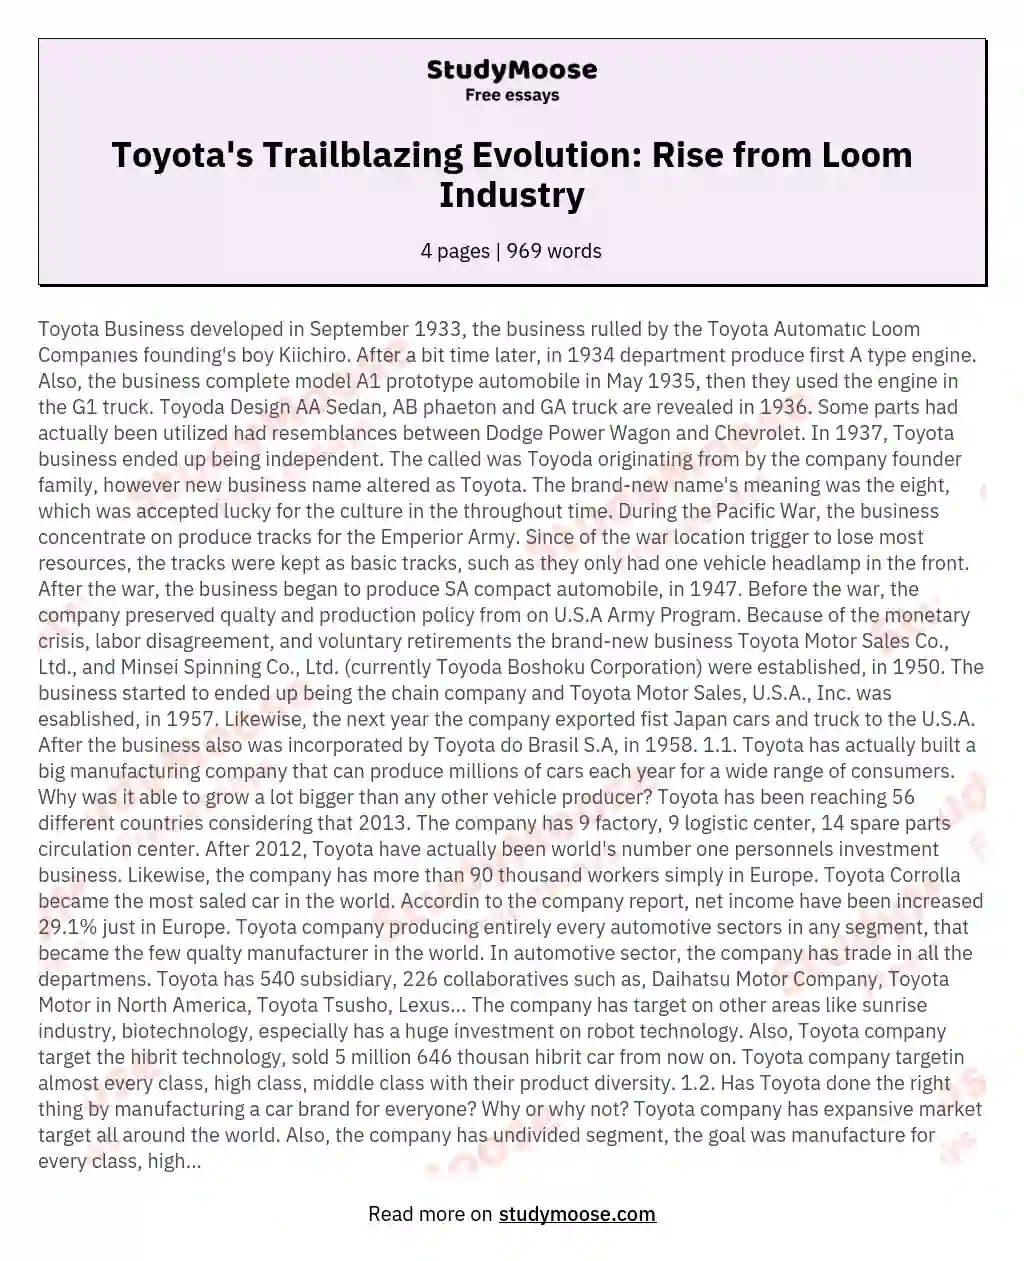 Toyota's Trailblazing Evolution: Rise from Loom Industry essay